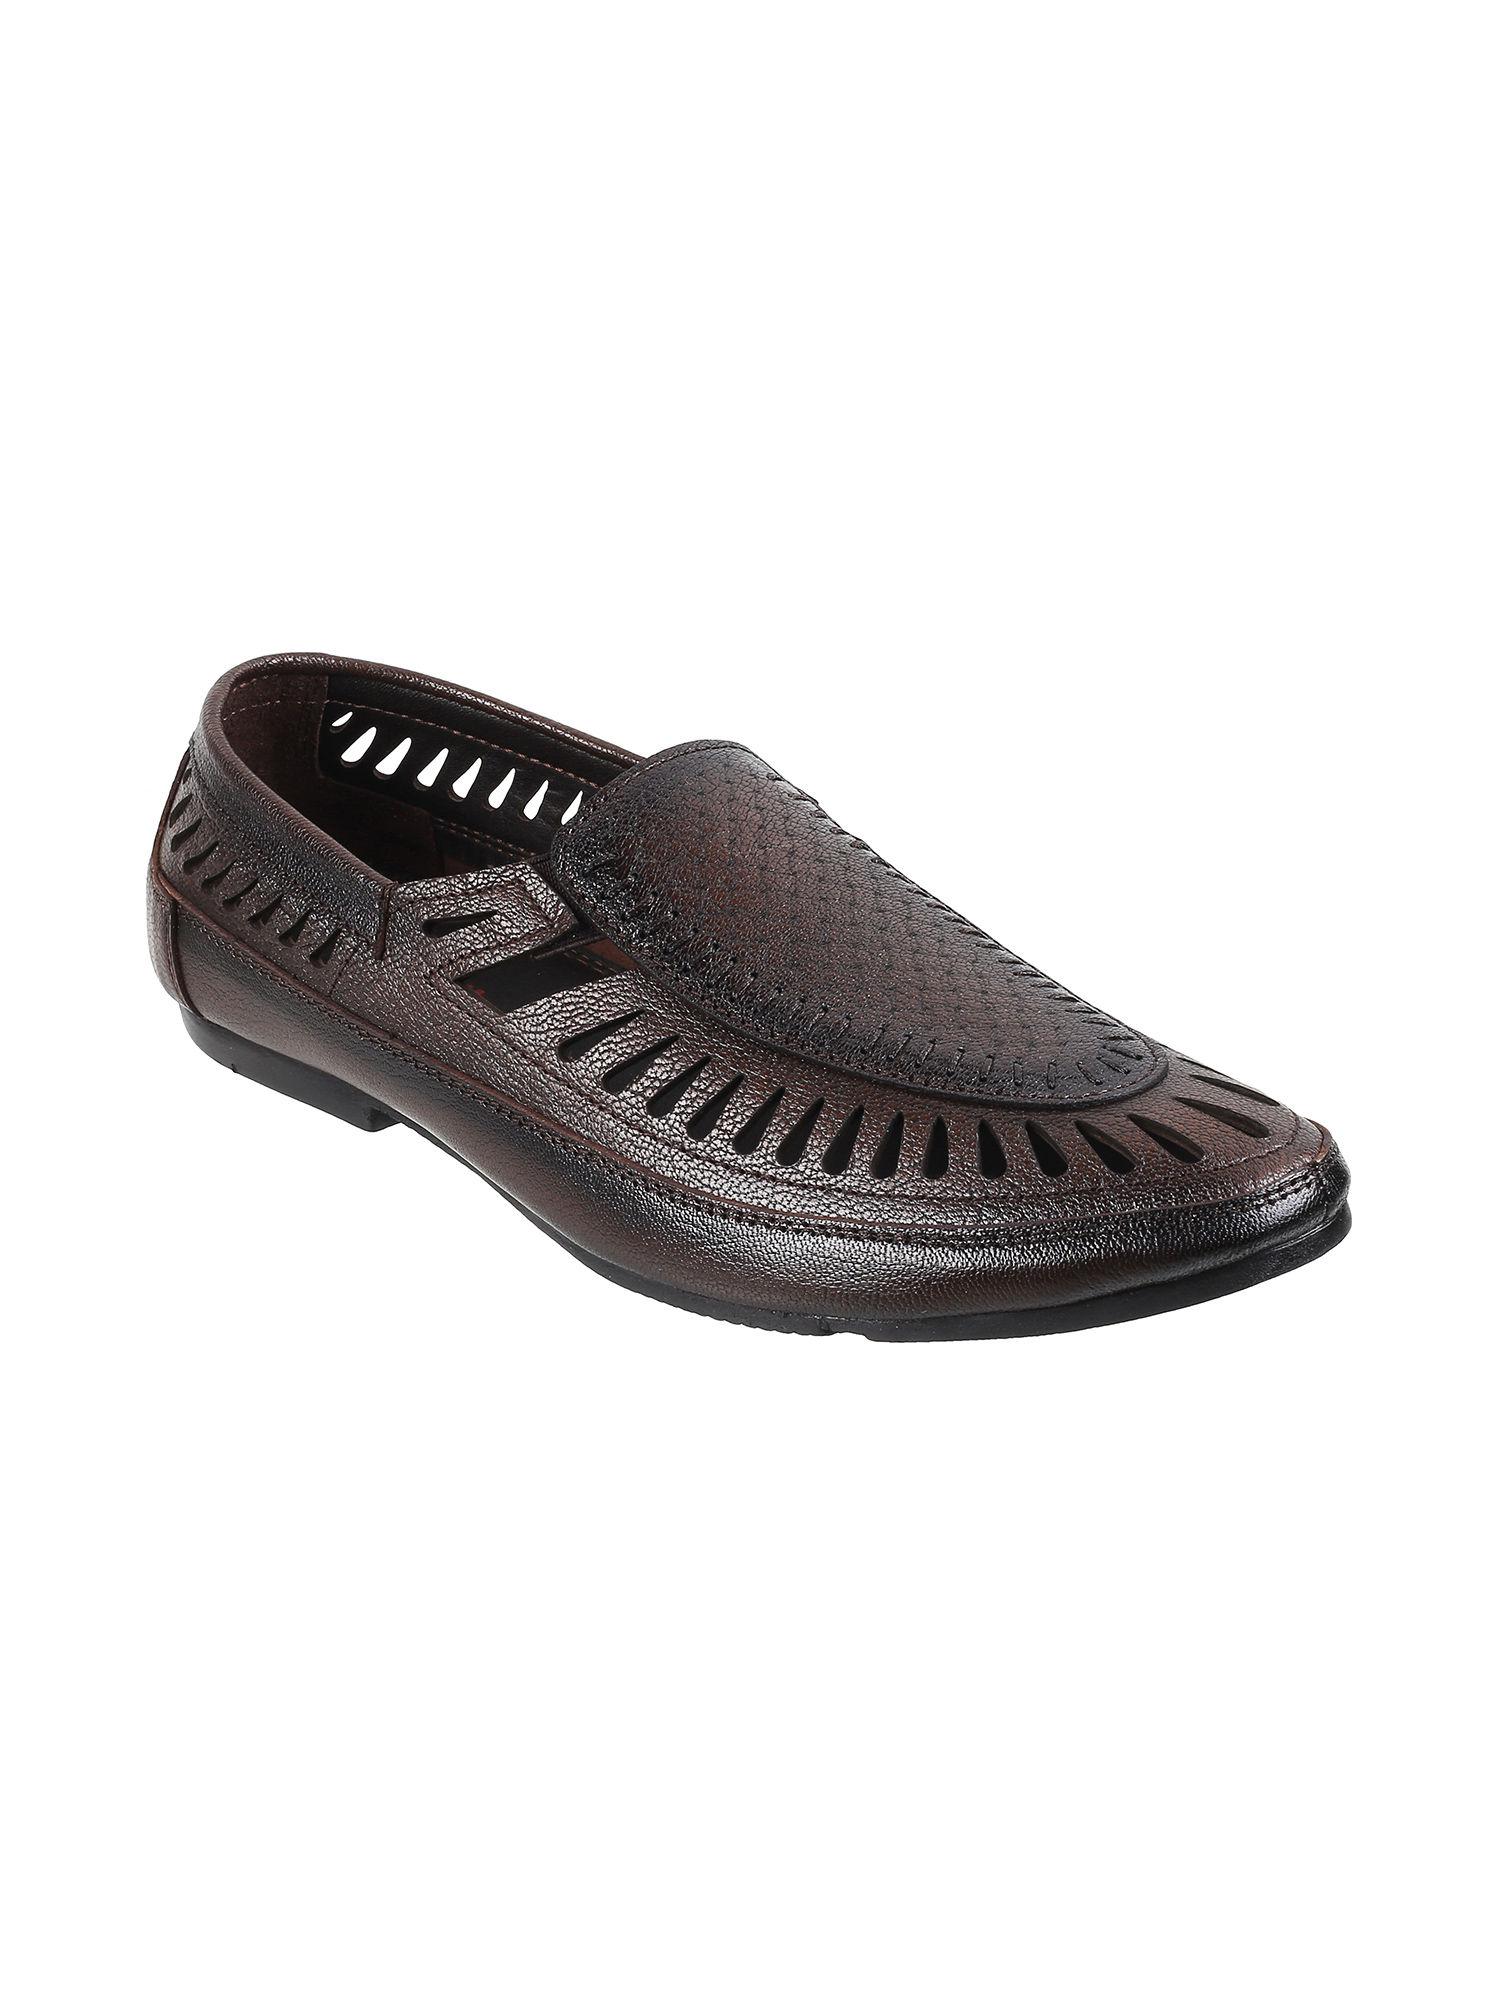 textured-men-leather-brown-sandals